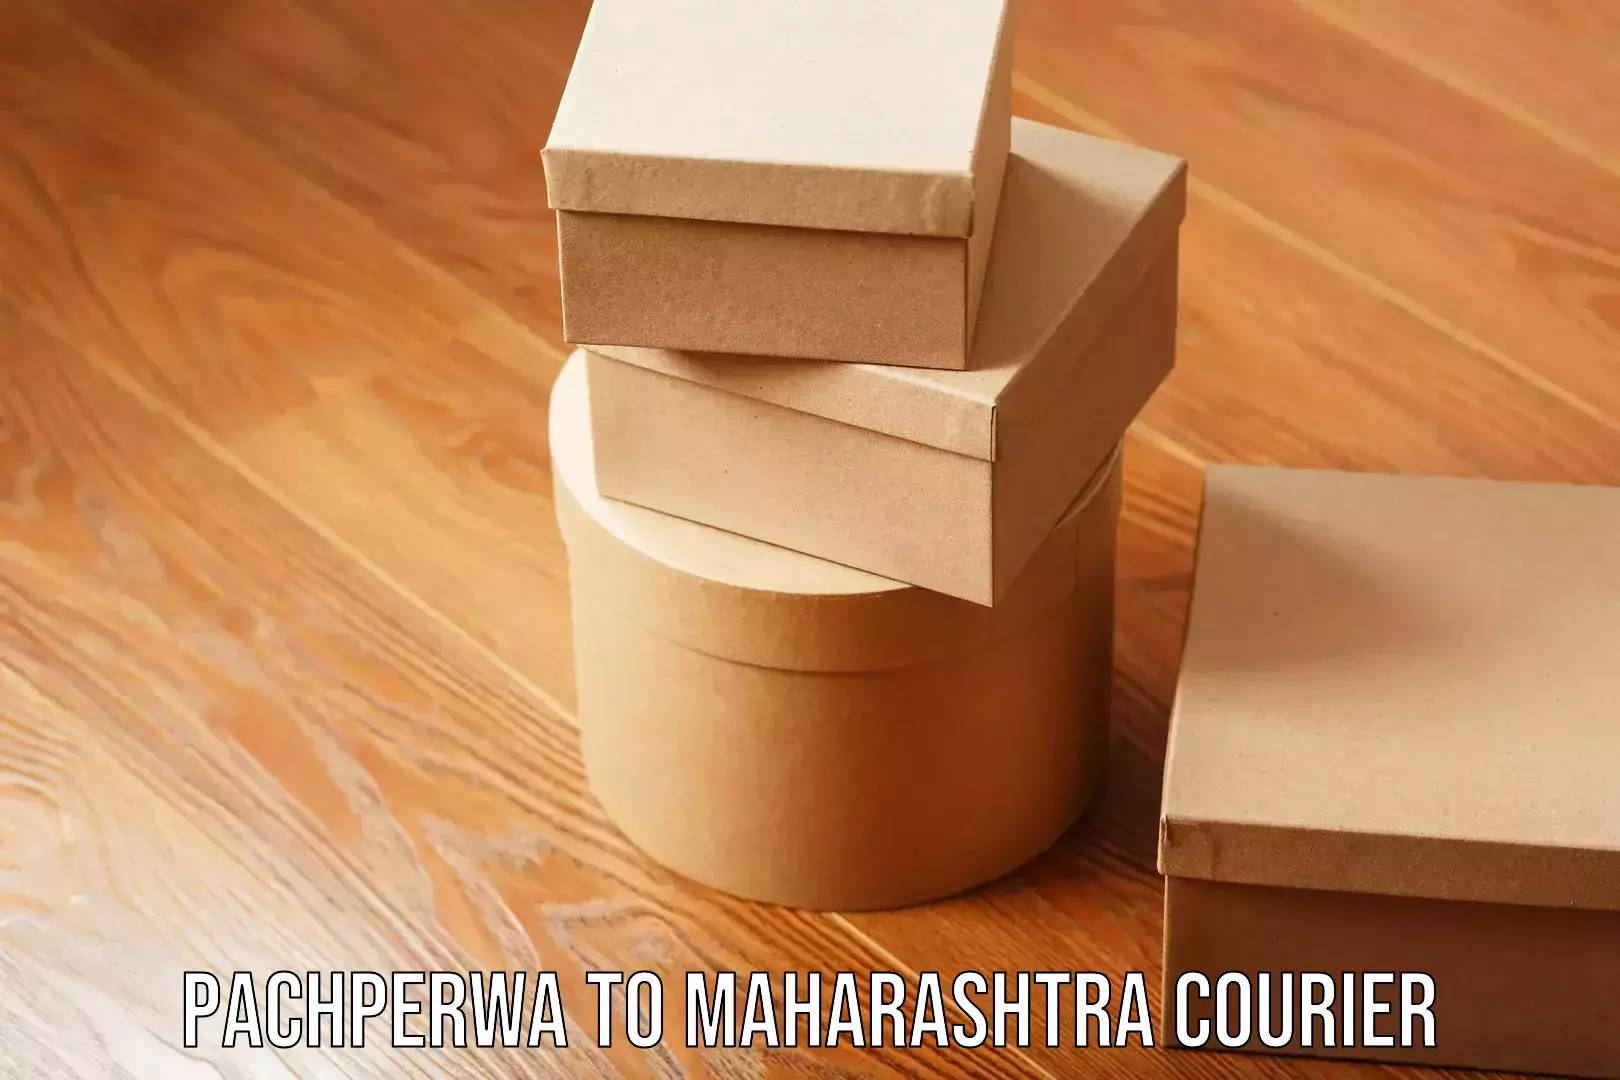 Professional movers Pachperwa to Maharashtra